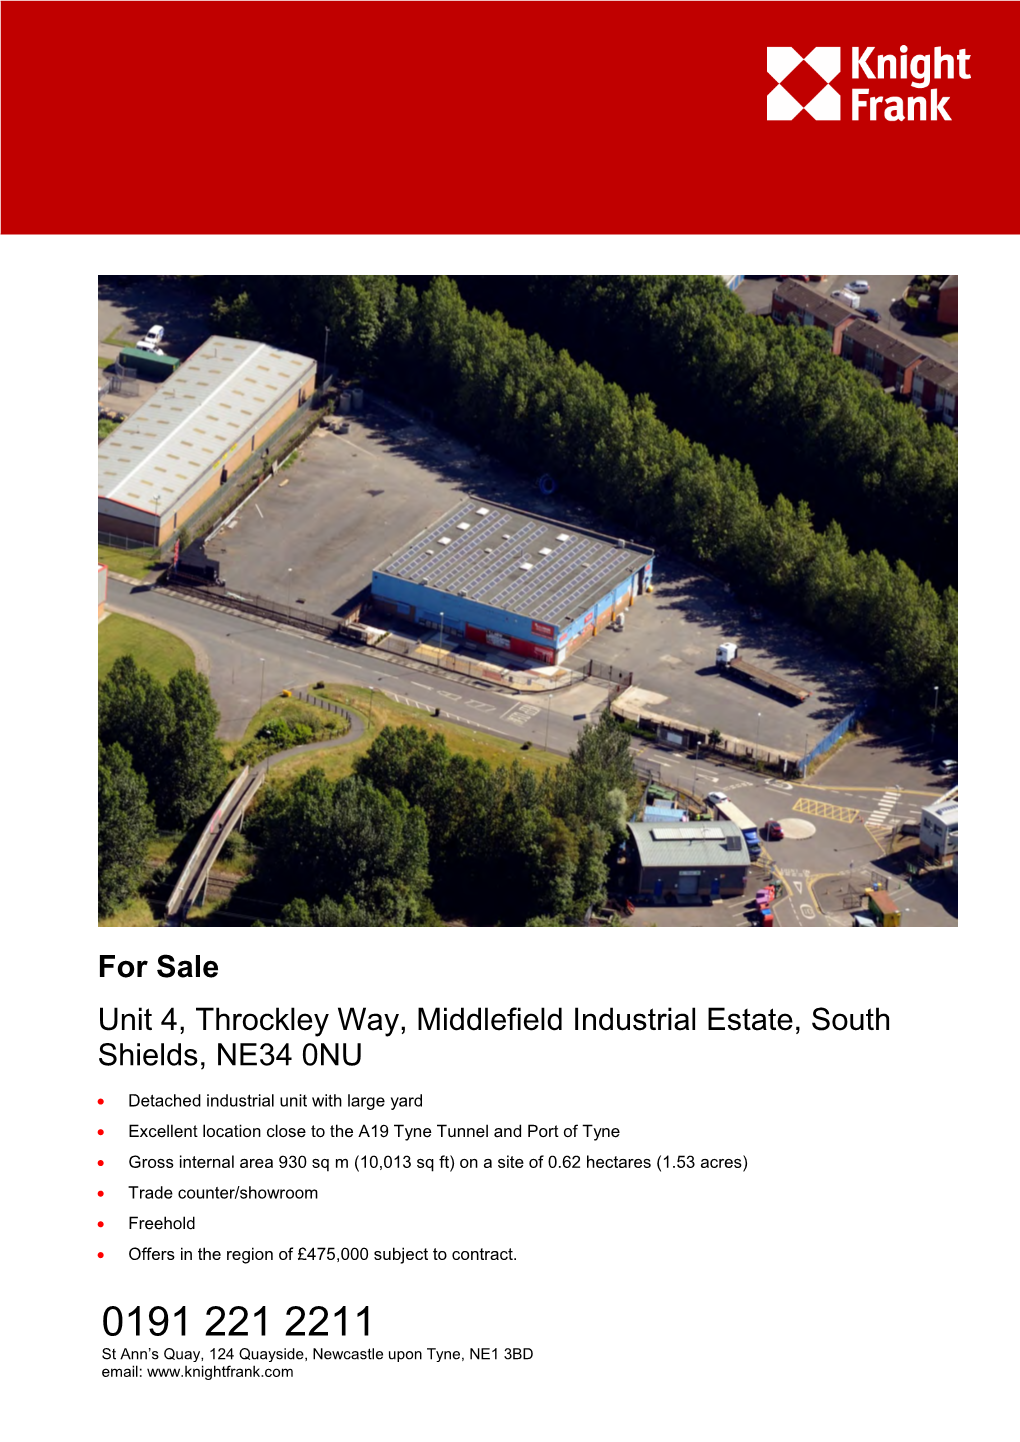 For Sale Unit 4, Throckley Way, Middlefield Industrial Estate, South Shields, NE34 0NU